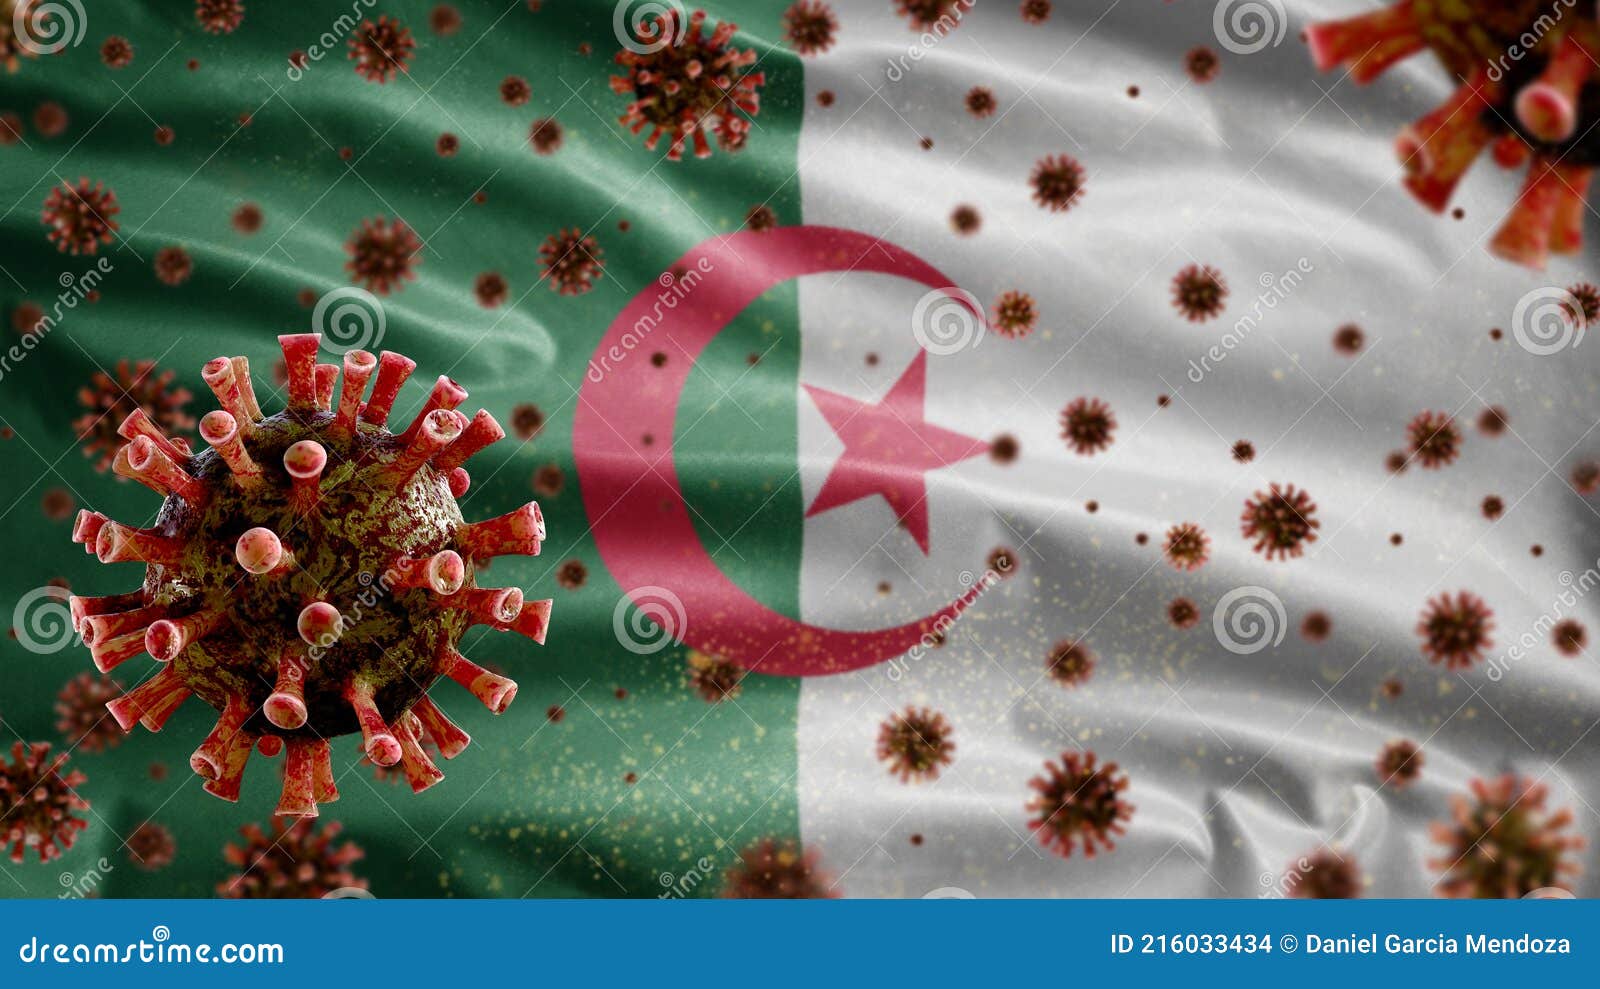 3d, flu coronavirus floating over algerian flag. argelia and pandemic covid 19